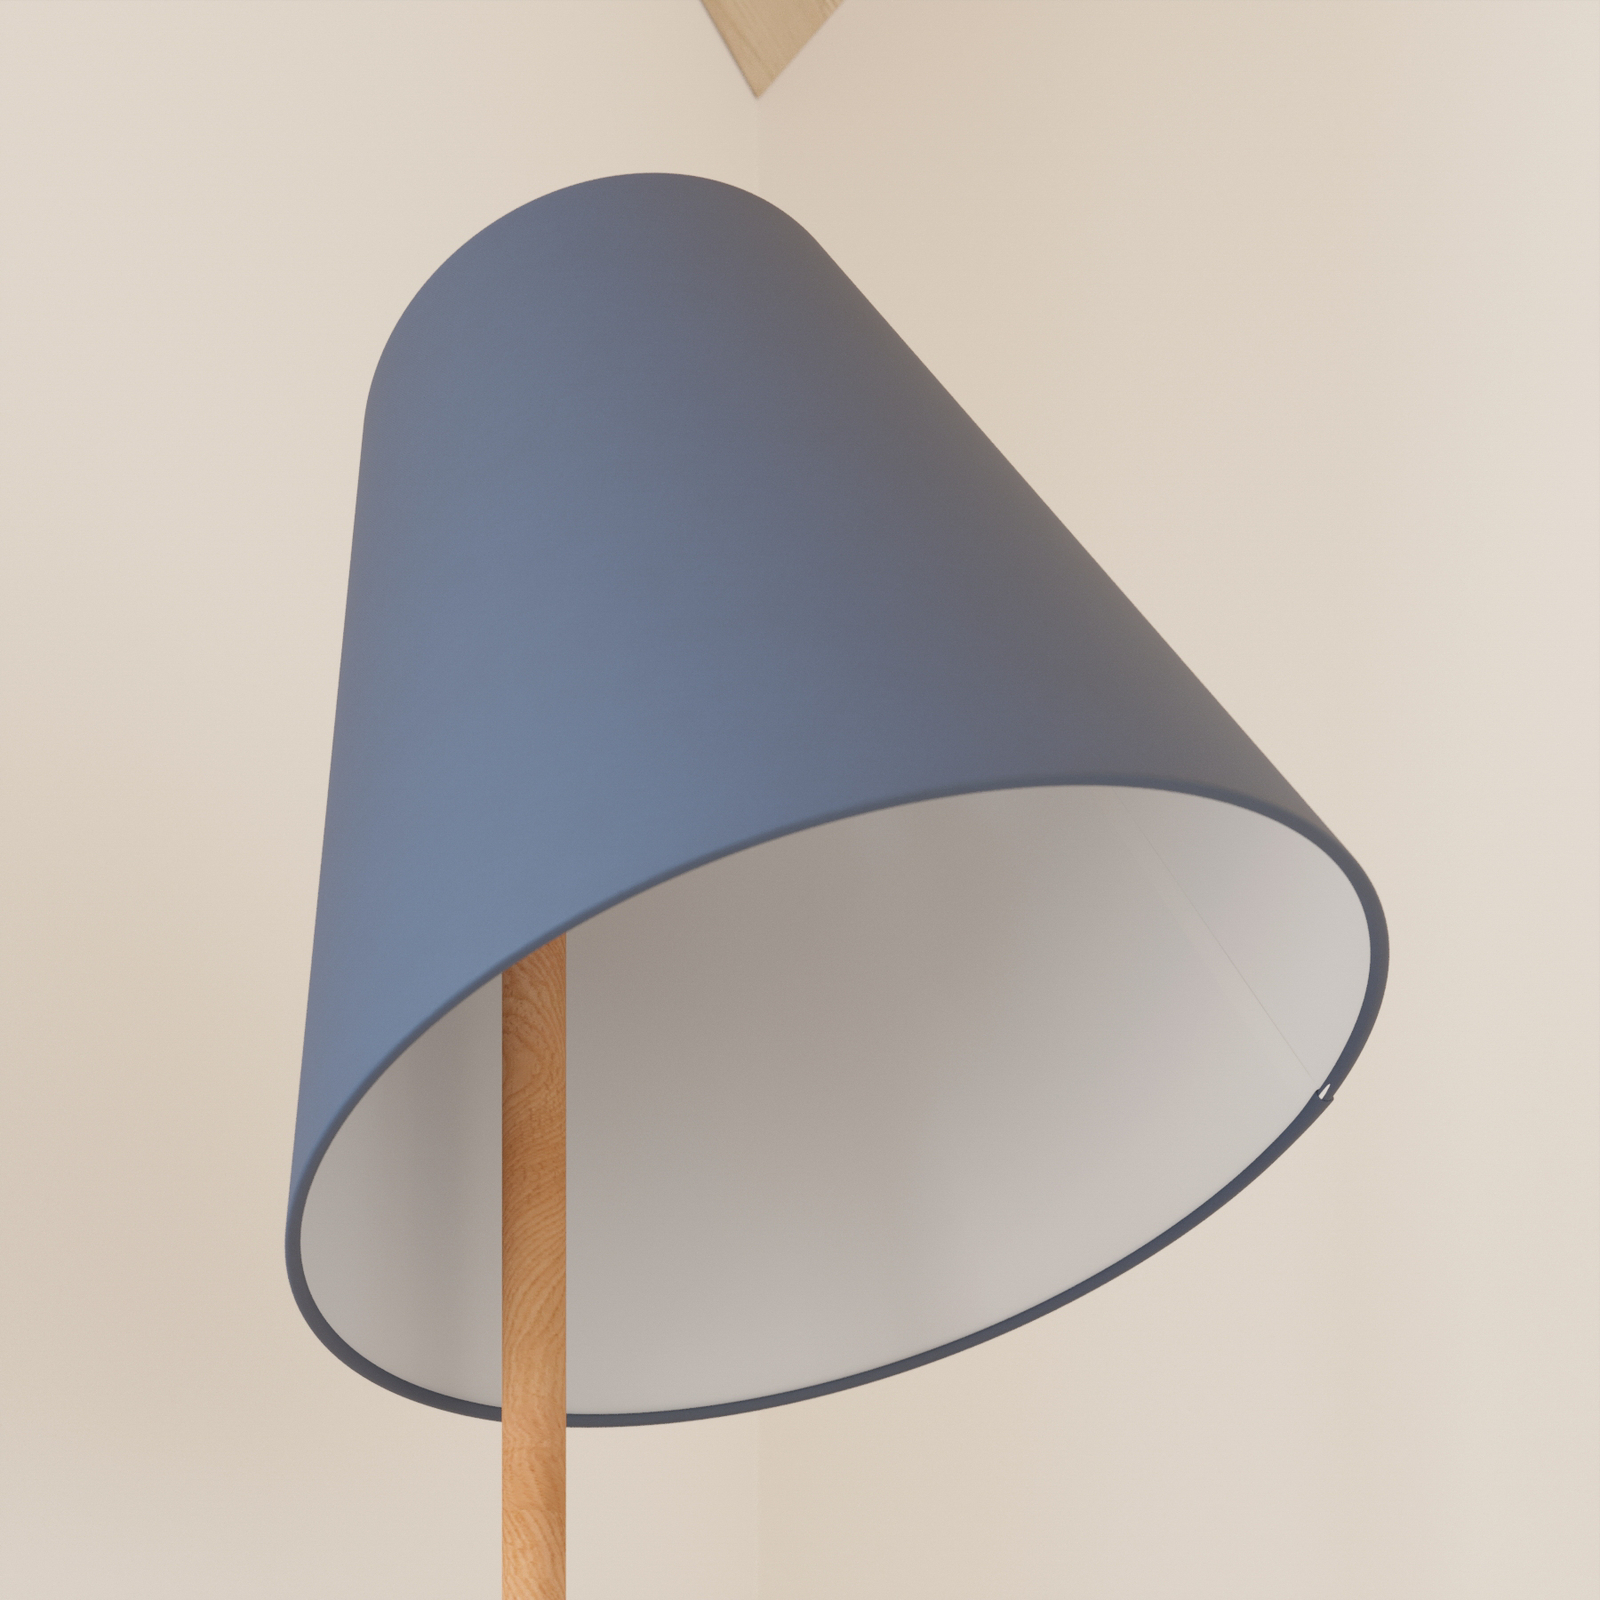 Lucande Jinda lámpara de pie, madera, tela azul